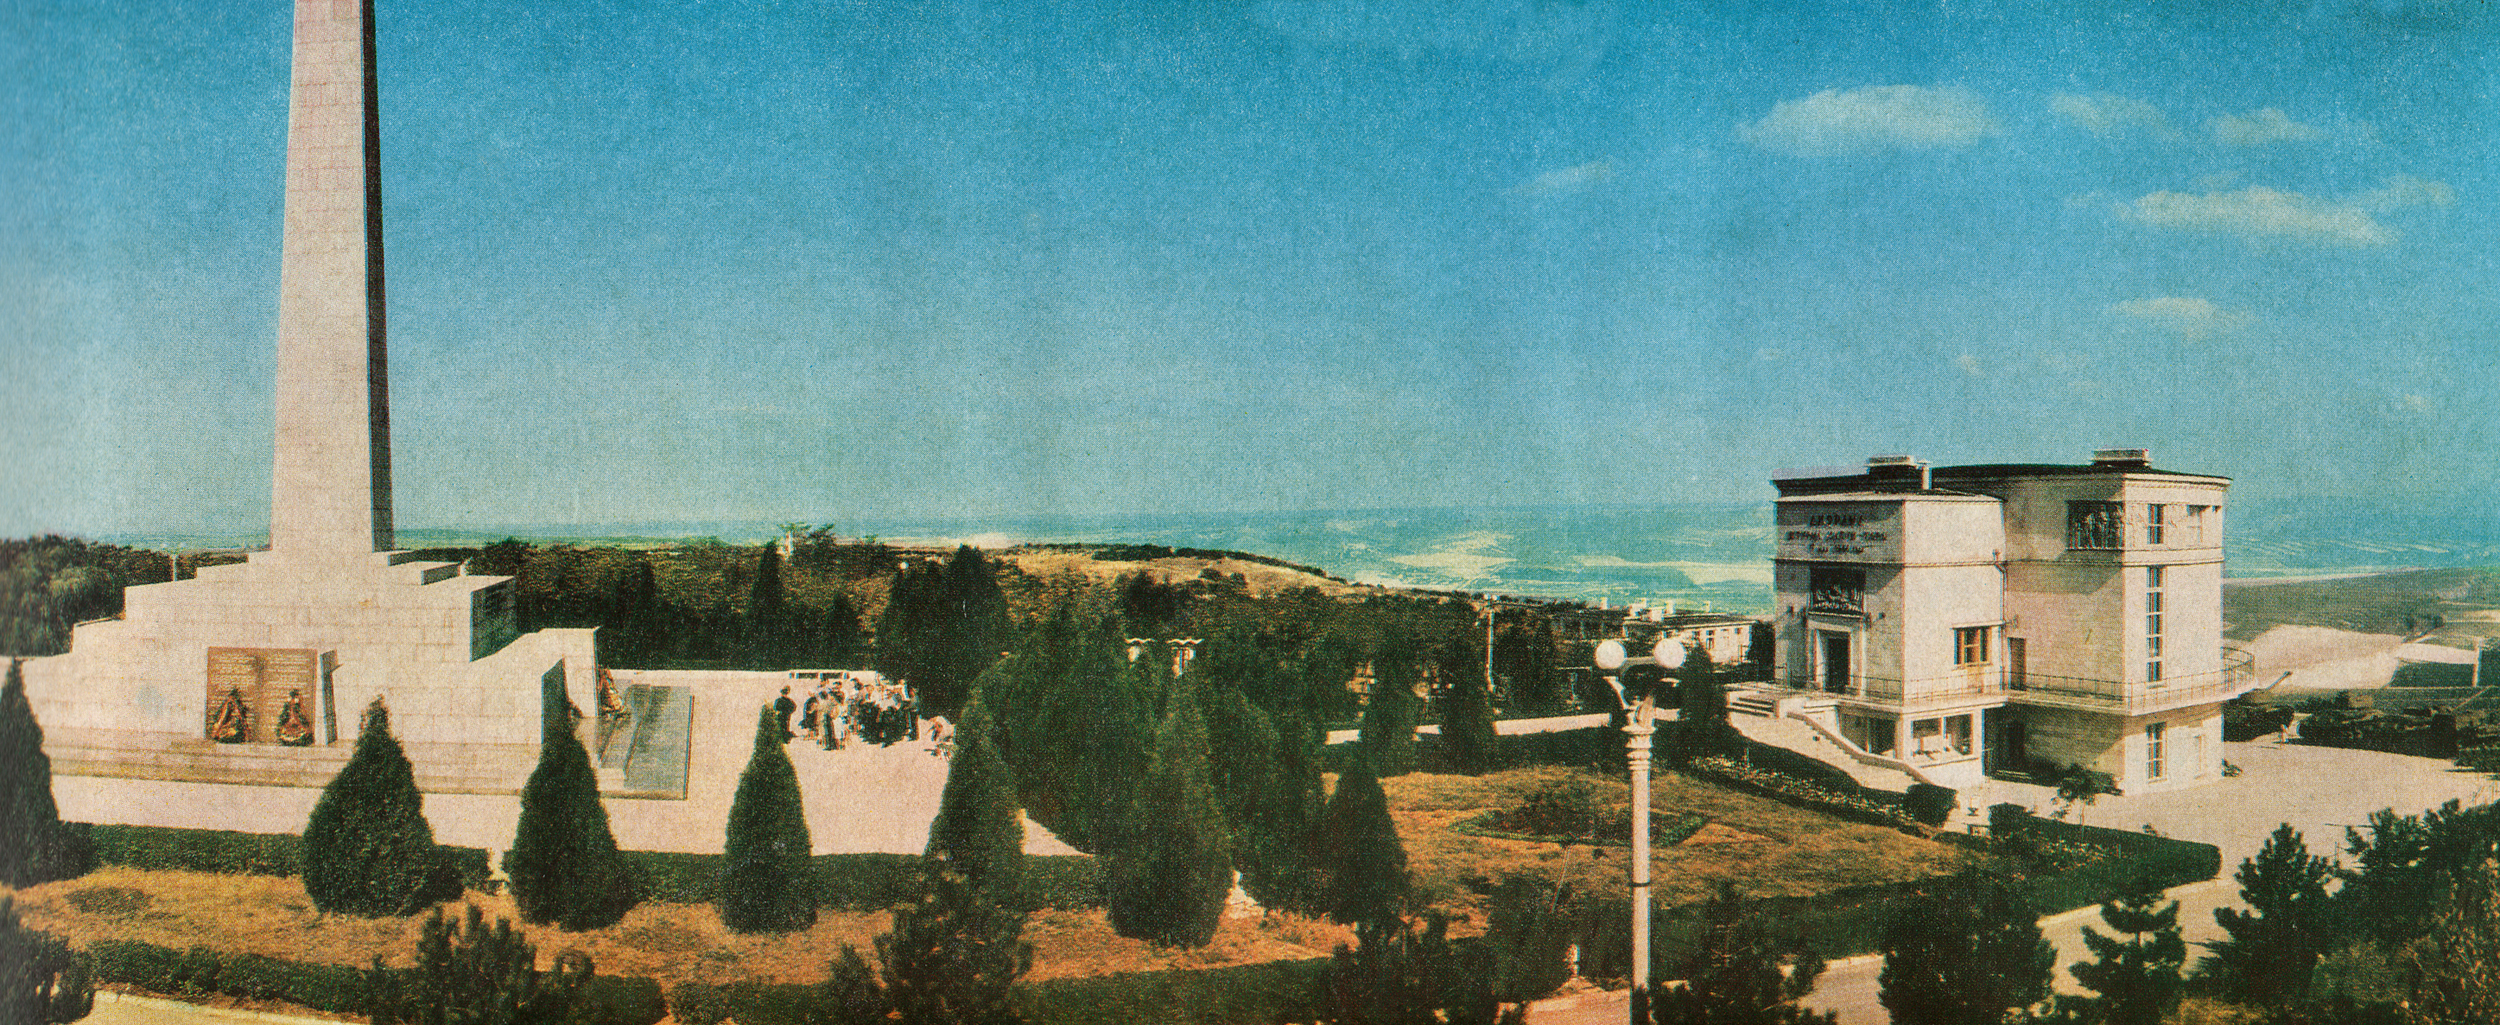 Памятник Славы и Диорама, 1970 